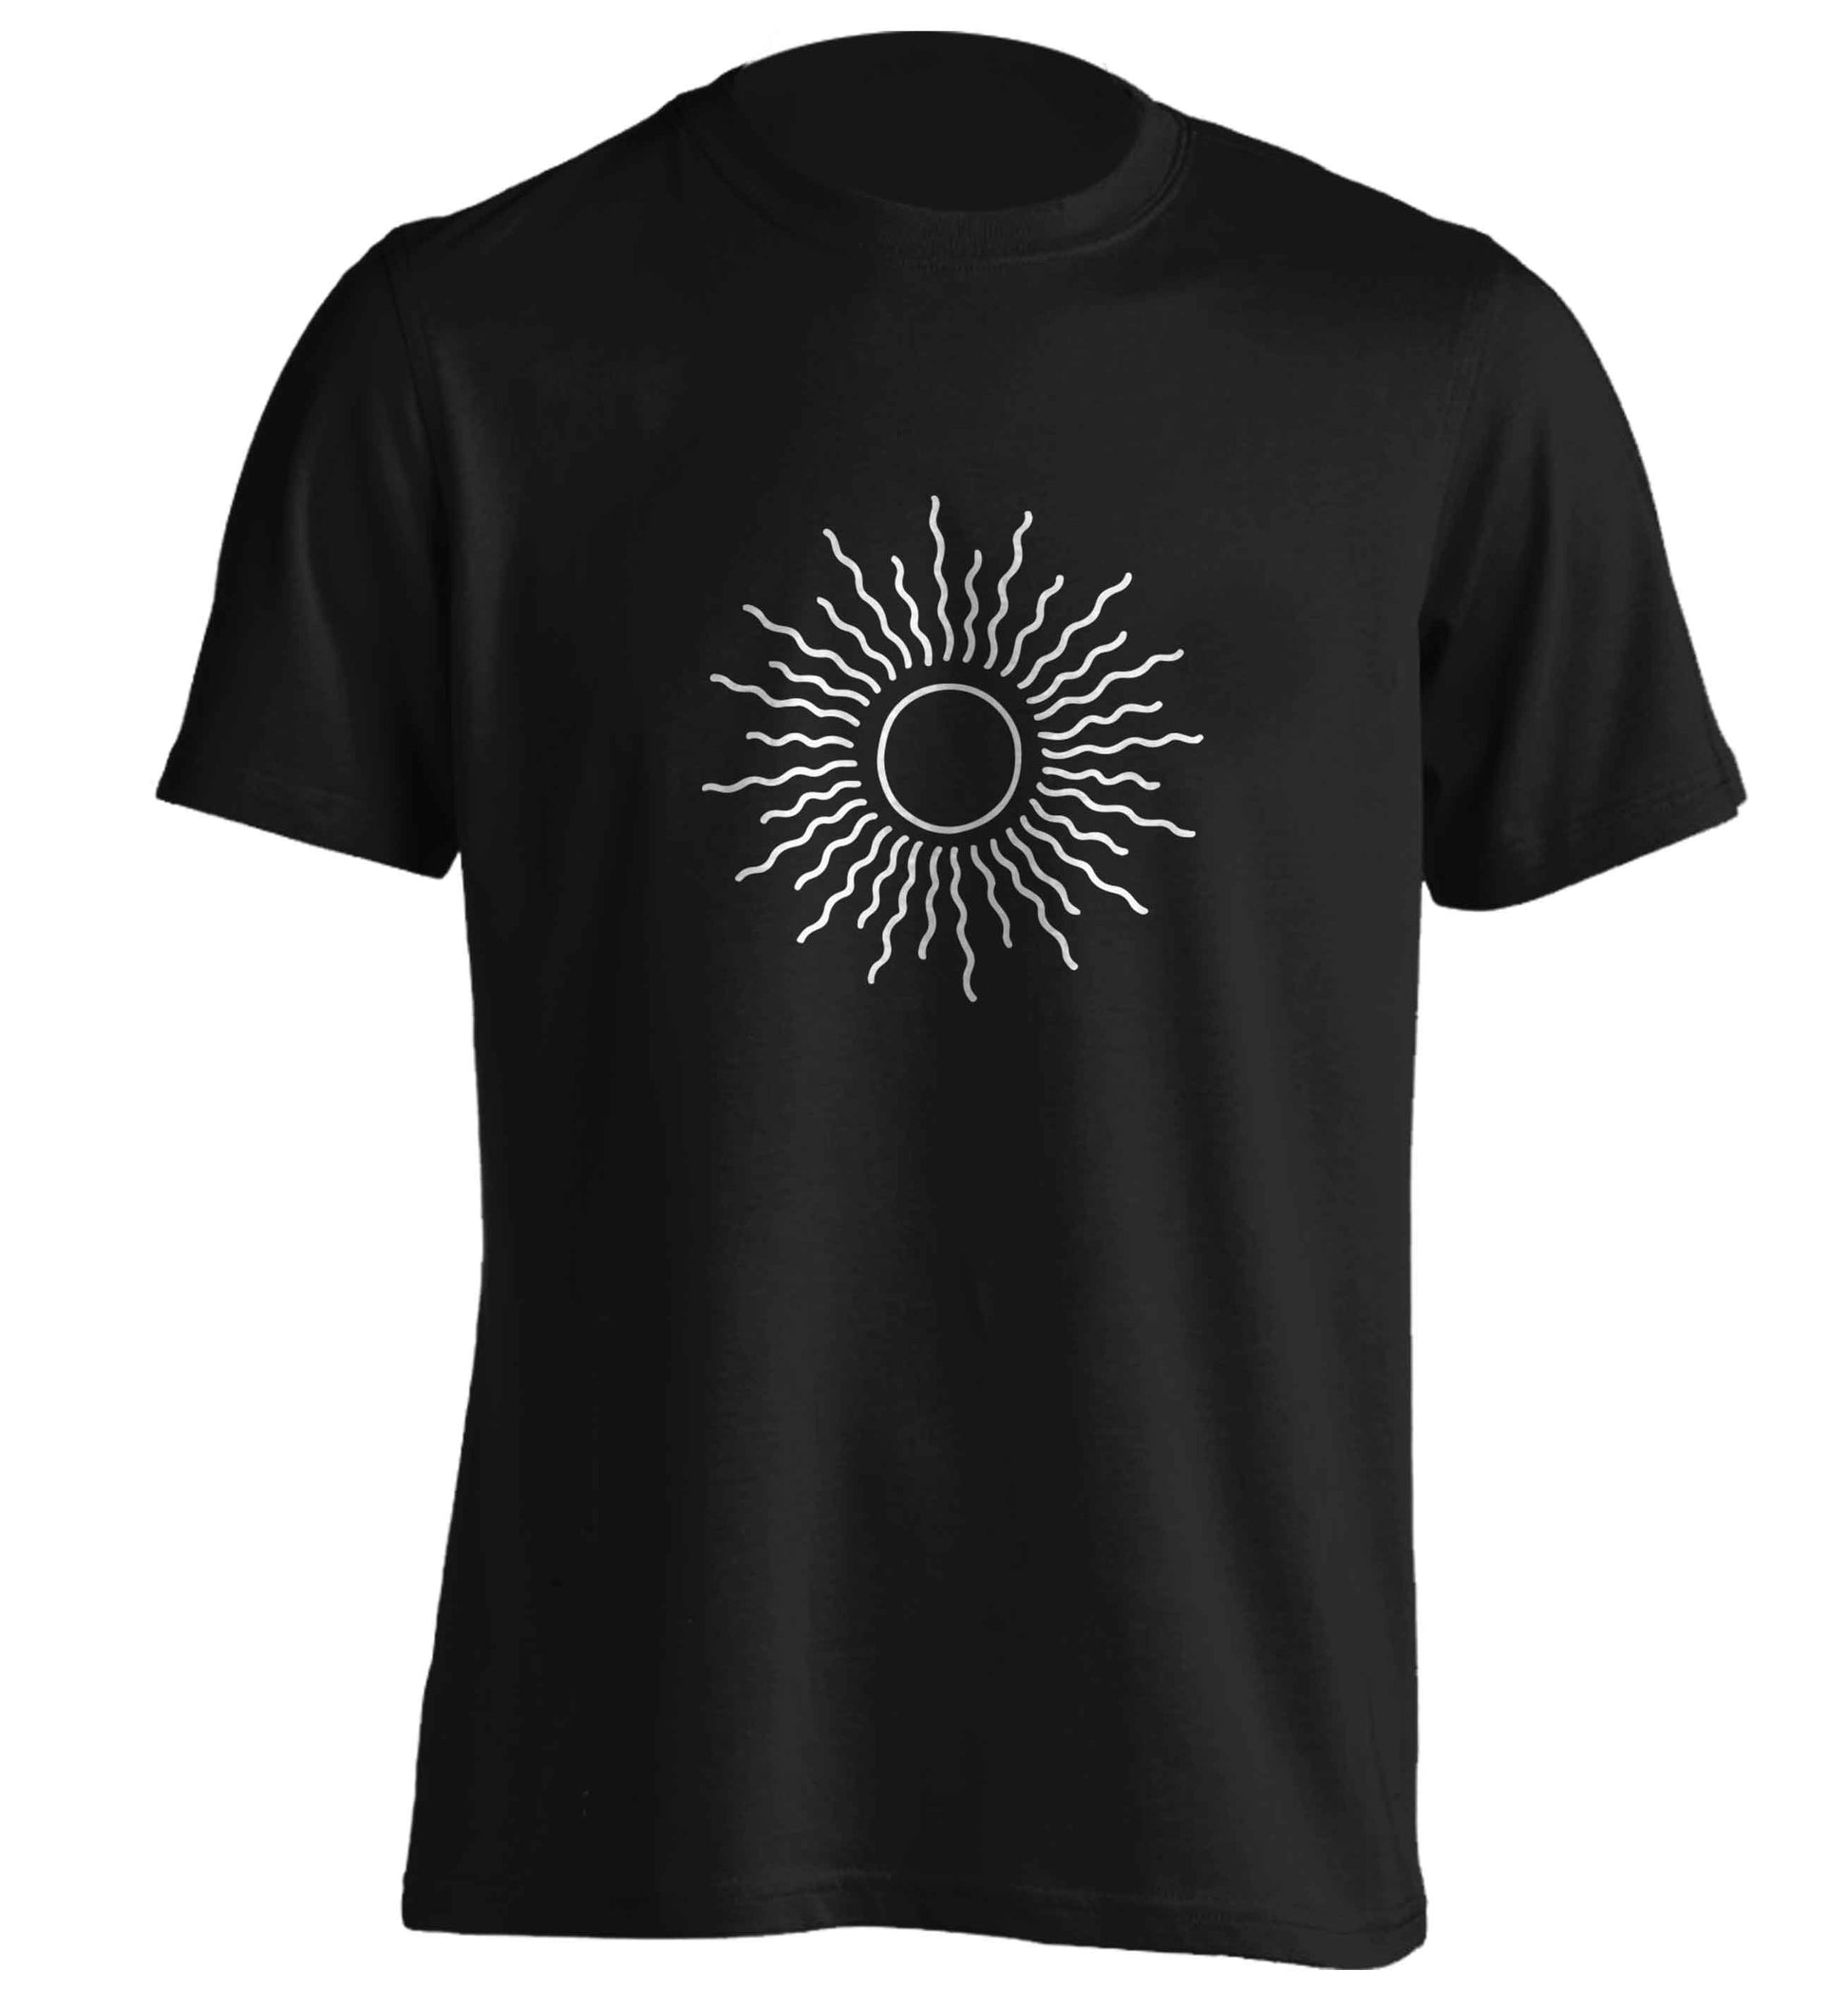 Sun illustration adults unisex black Tshirt 2XL